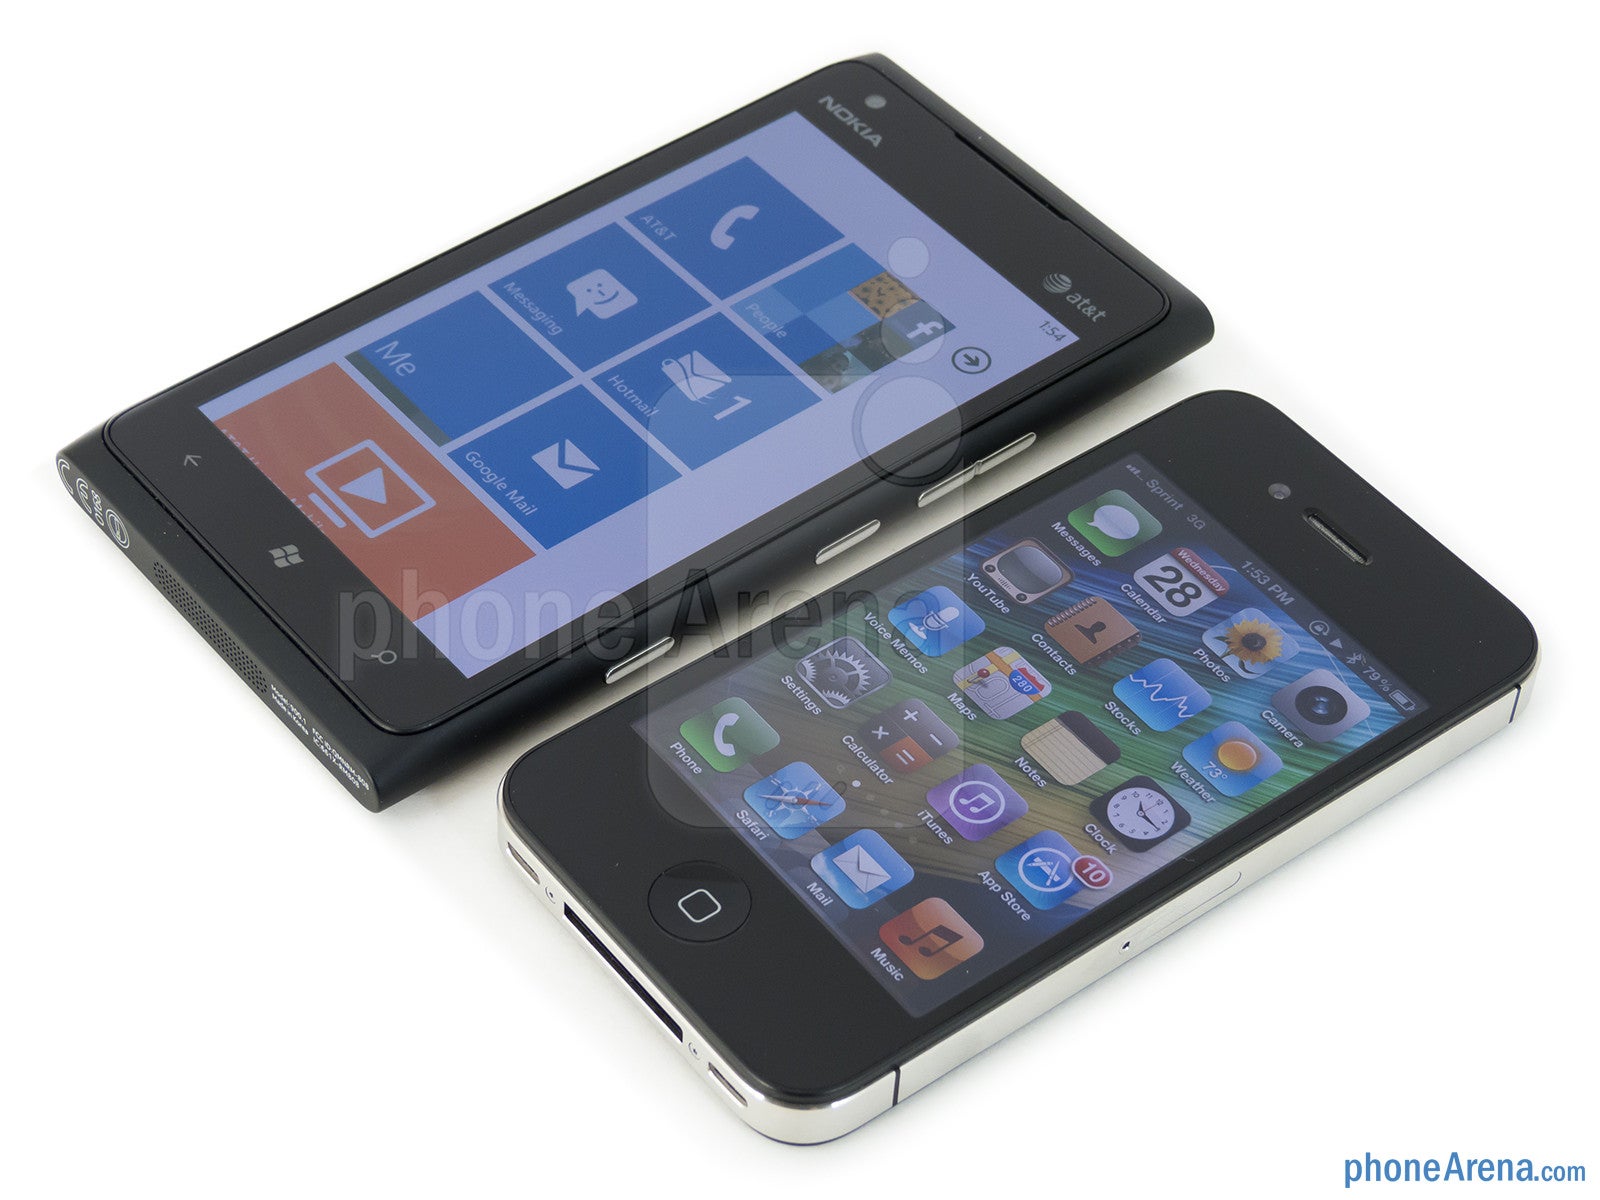 Nokia Lumia 900 vs Apple iPhone 4S